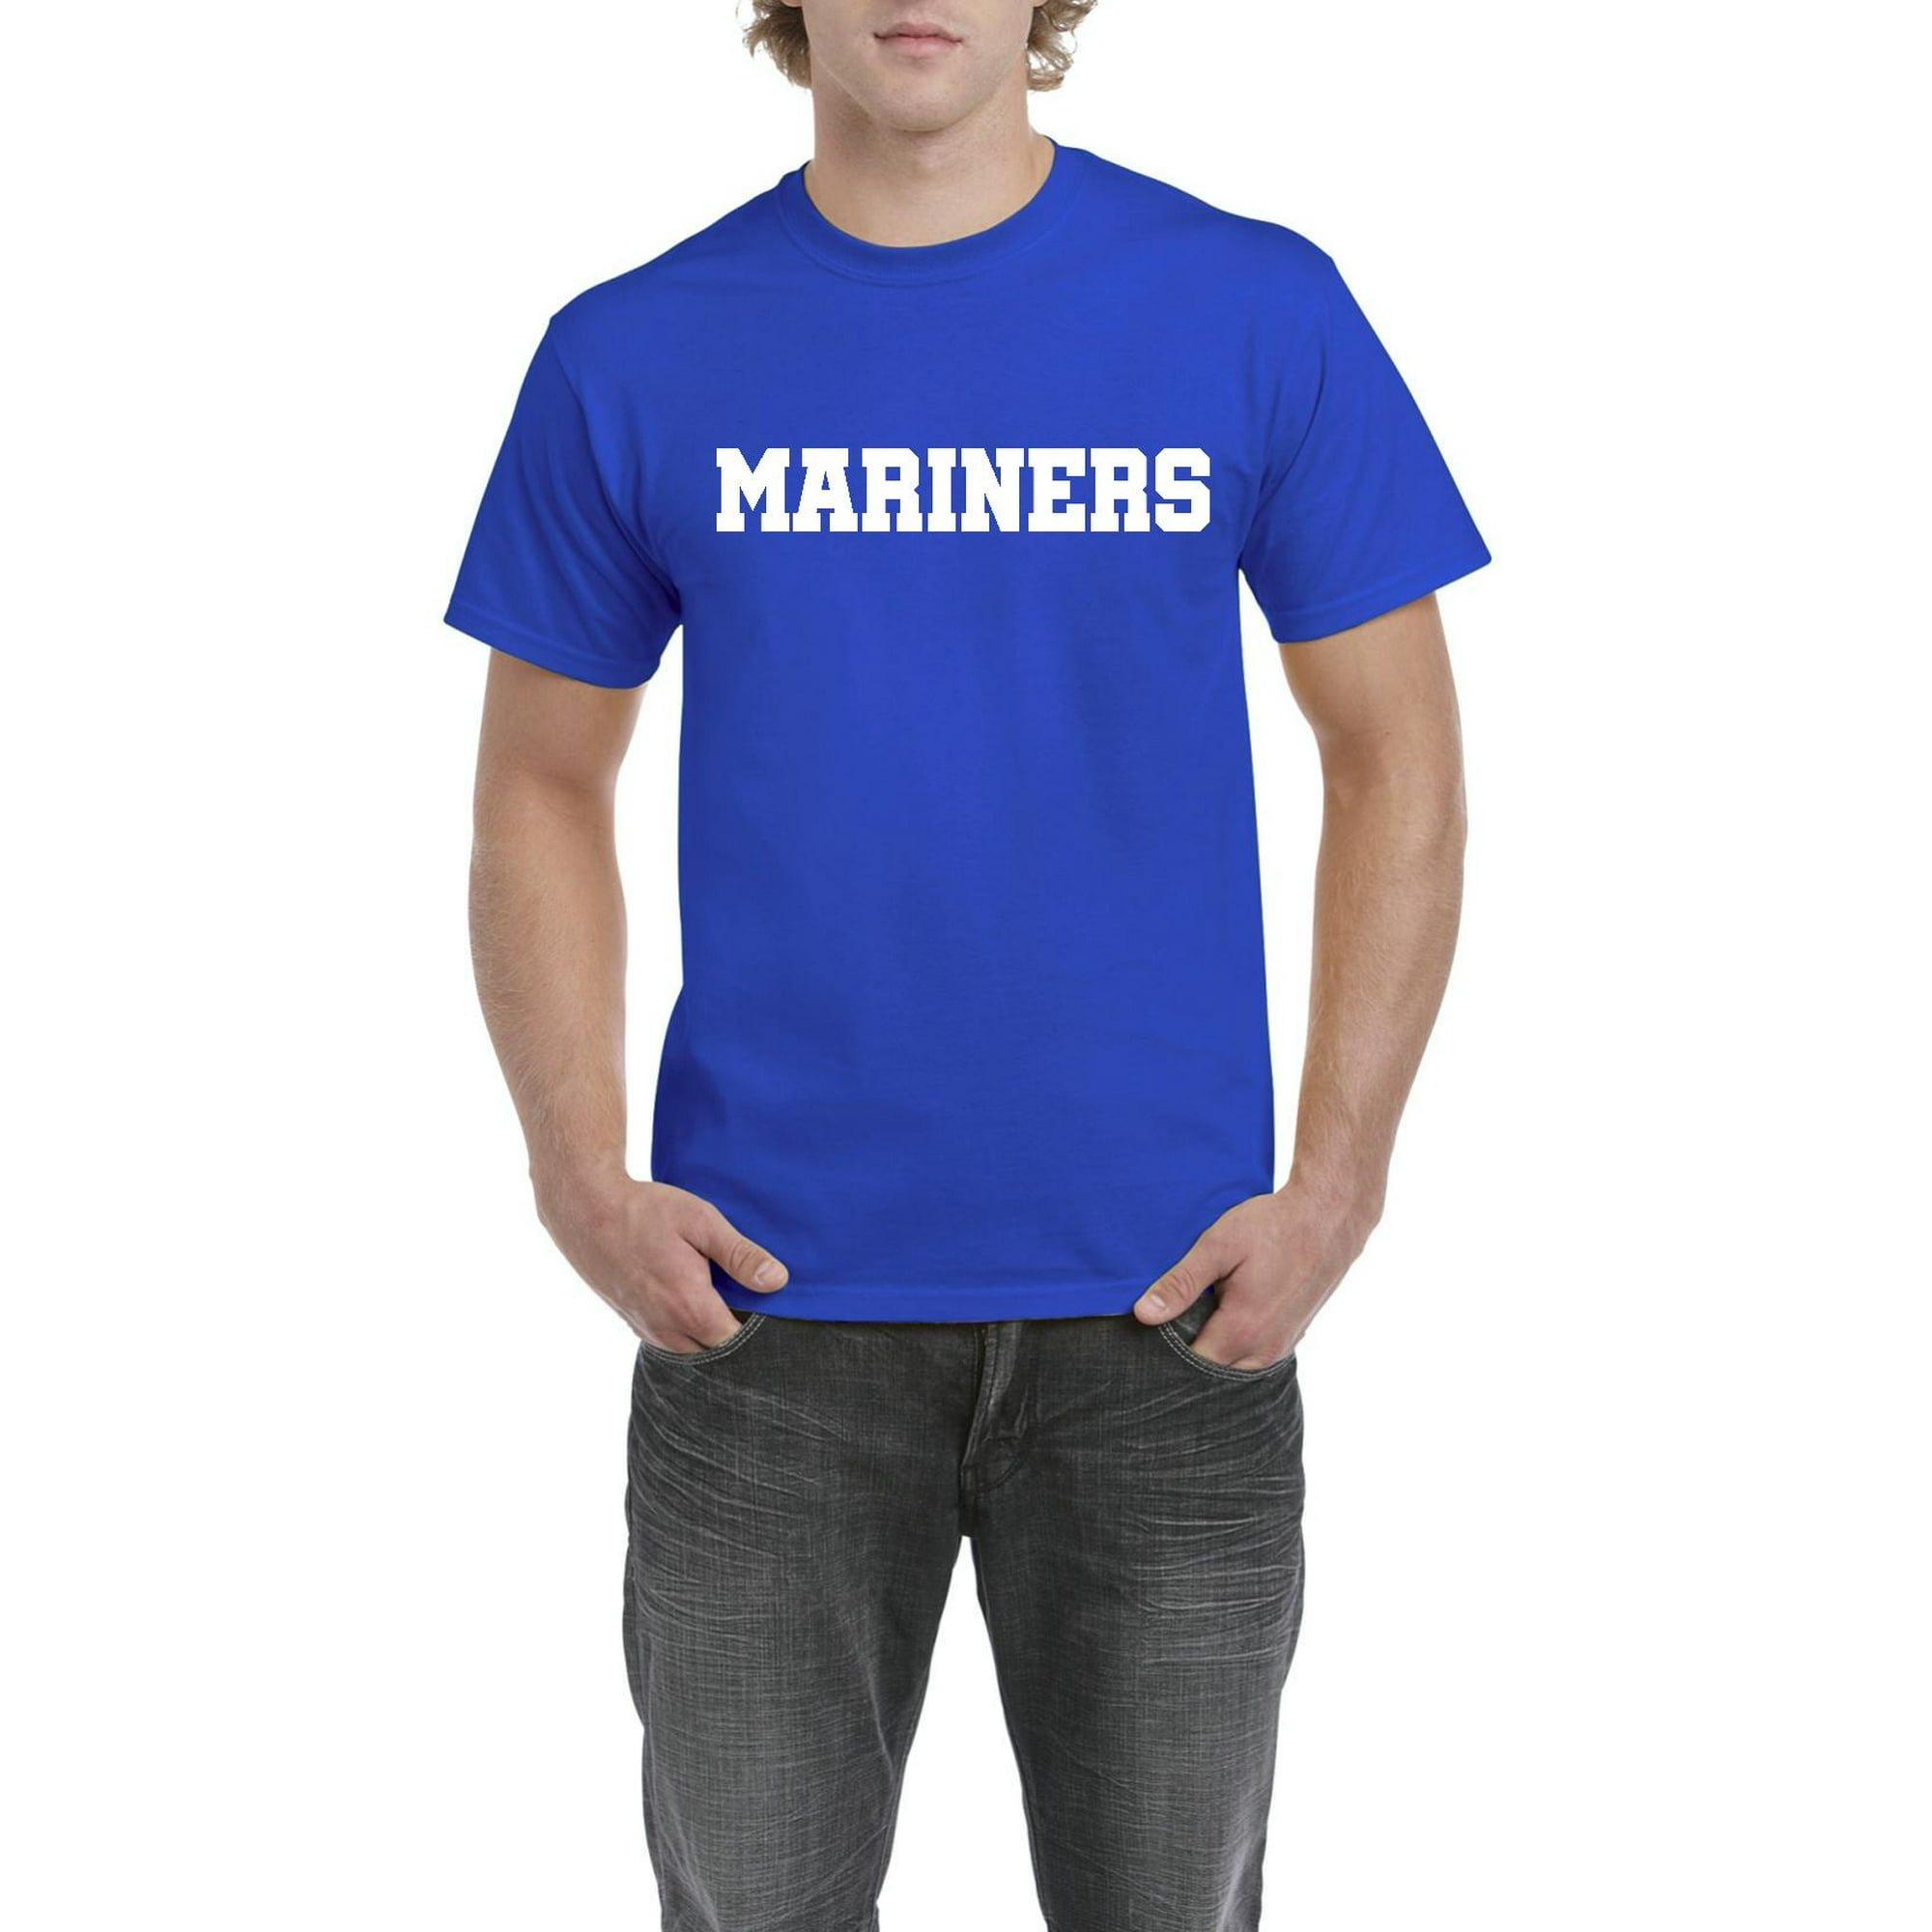 Artix - Men's T-Shirt Short Sleeve - Mariners 